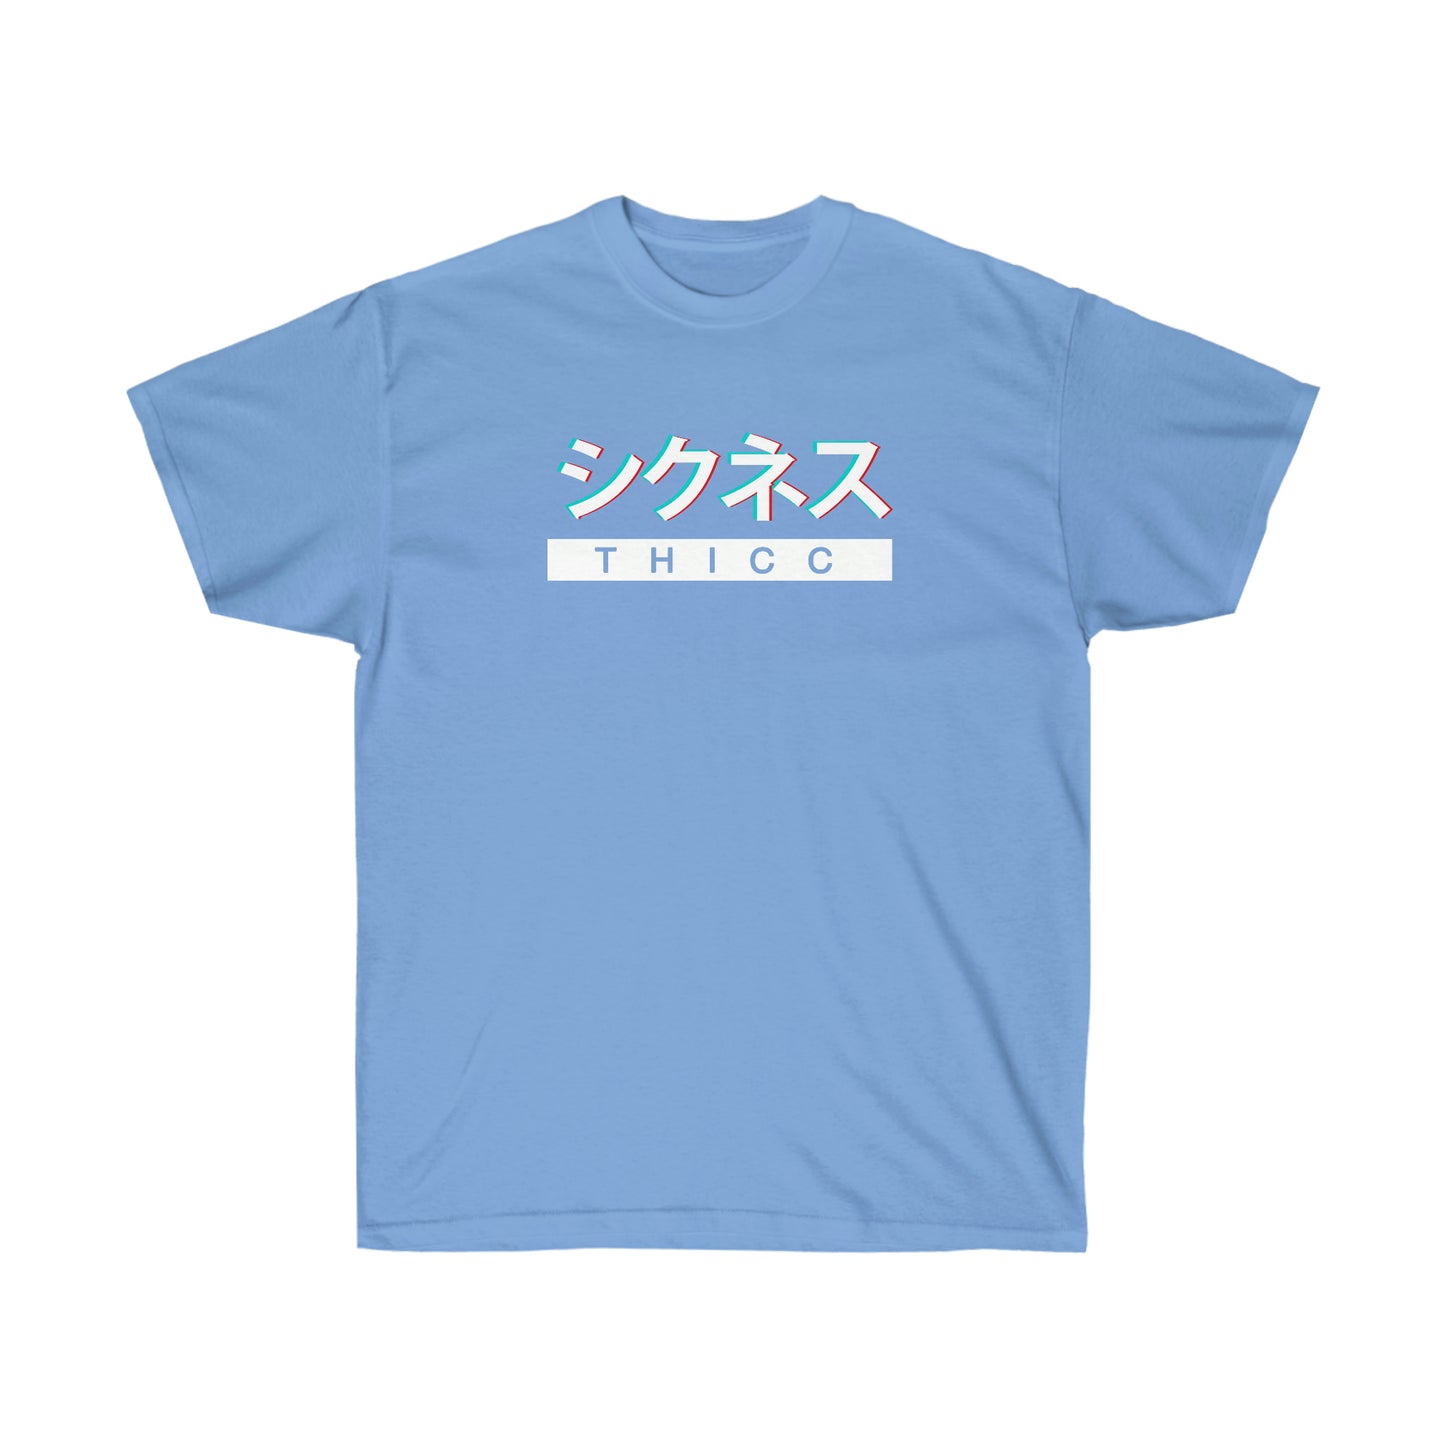 THICC t-Shirt Anime shirt Glitch Vaporwave Aesthetic Japanese Streetwear Tumblr Tee Grunge T-shirt Aesthetic tee Minimal Simple